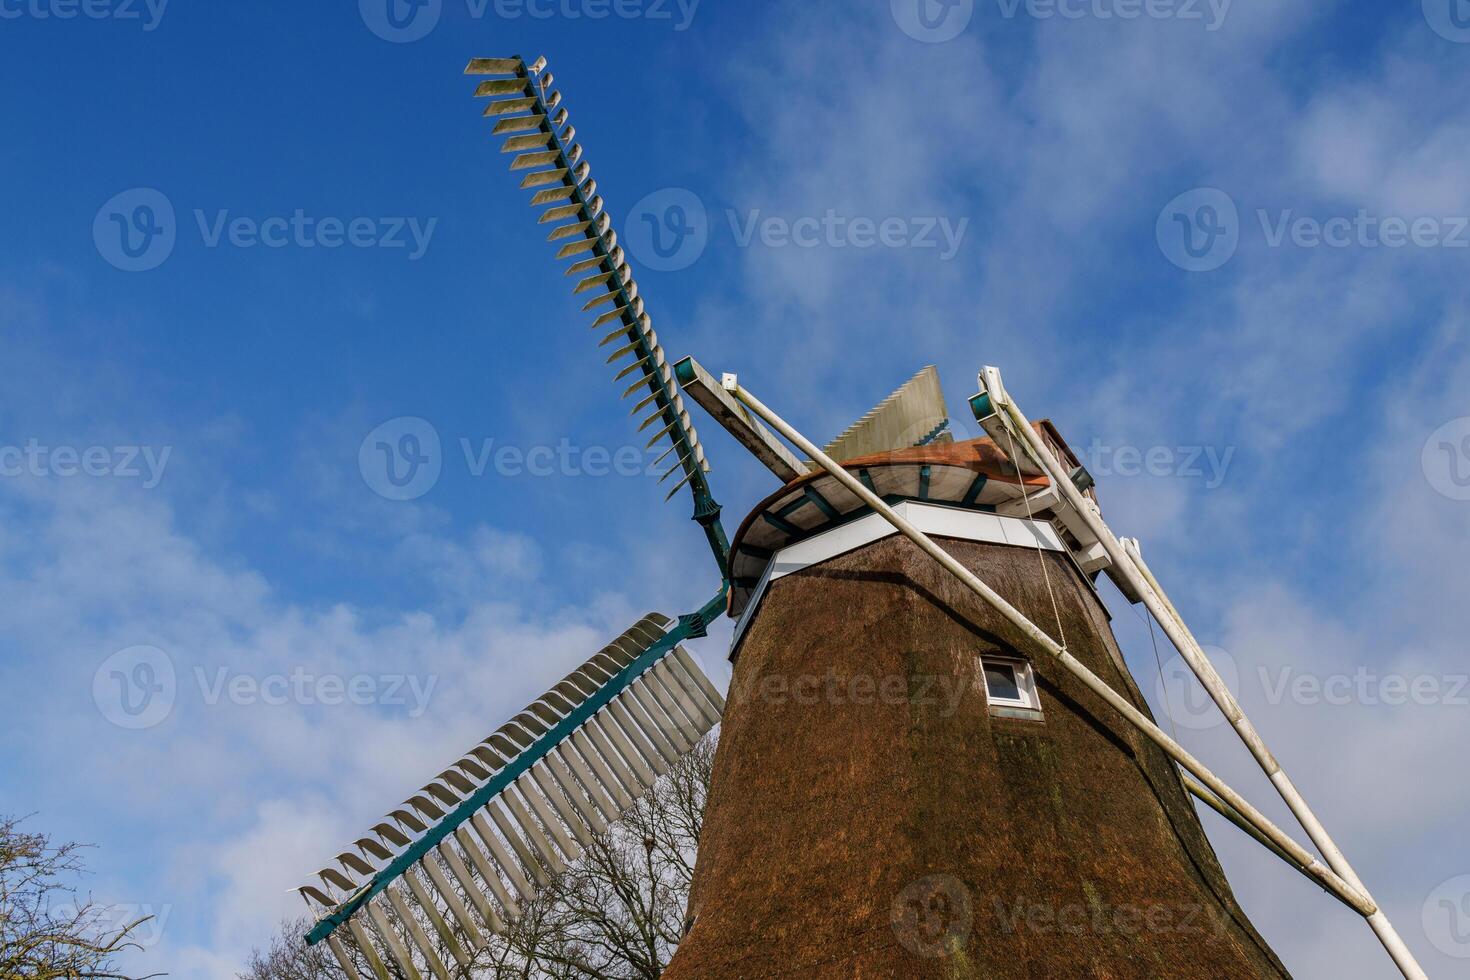 Windmühle in Ostfriesland foto